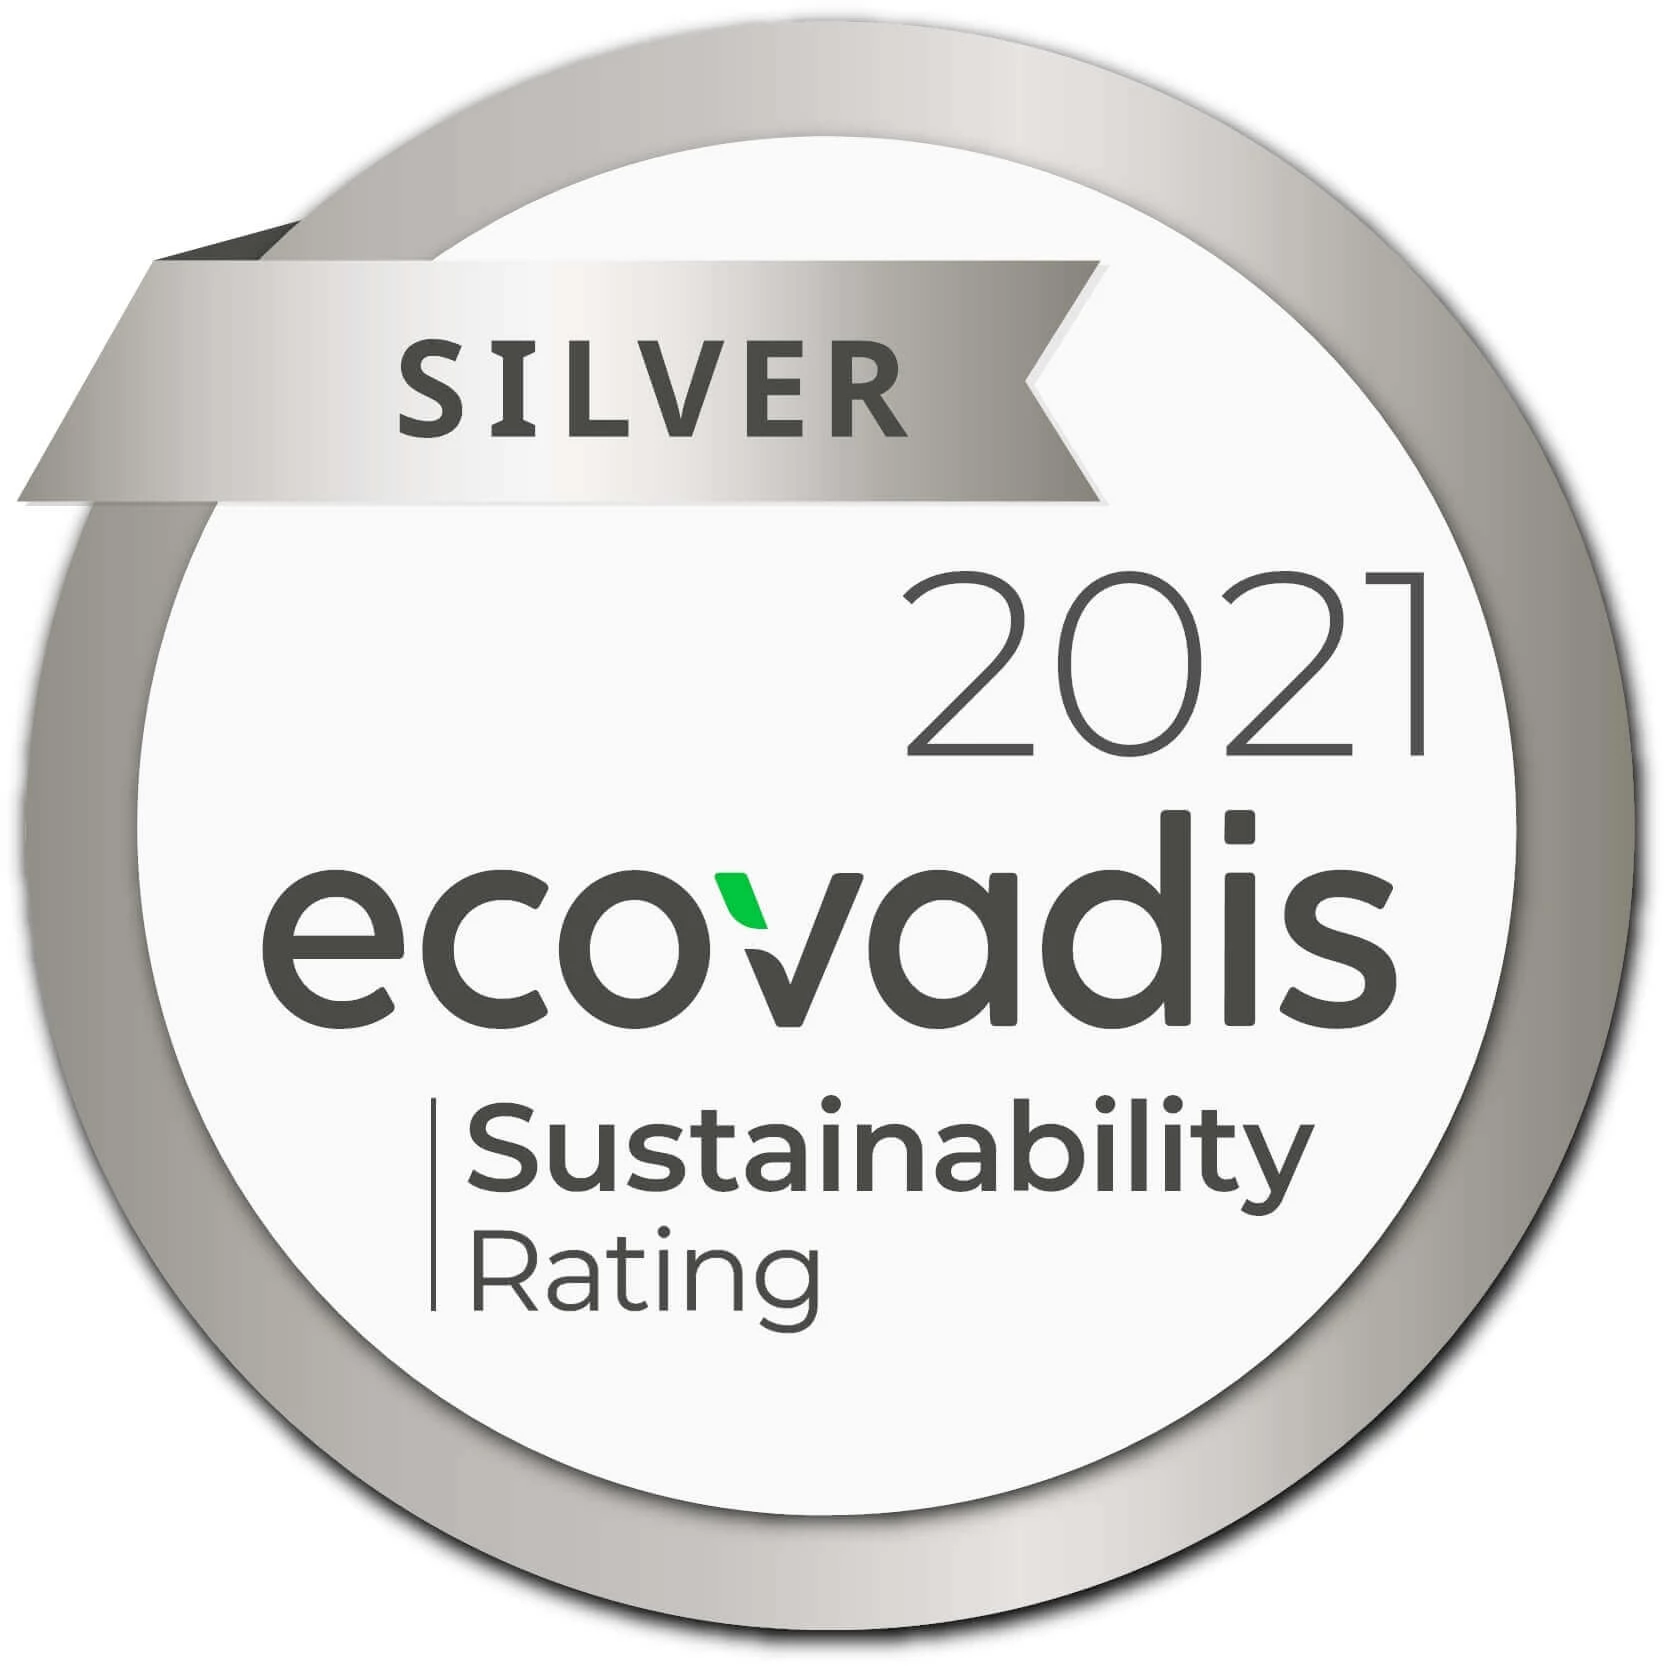 Ecovardis Silver Award 1